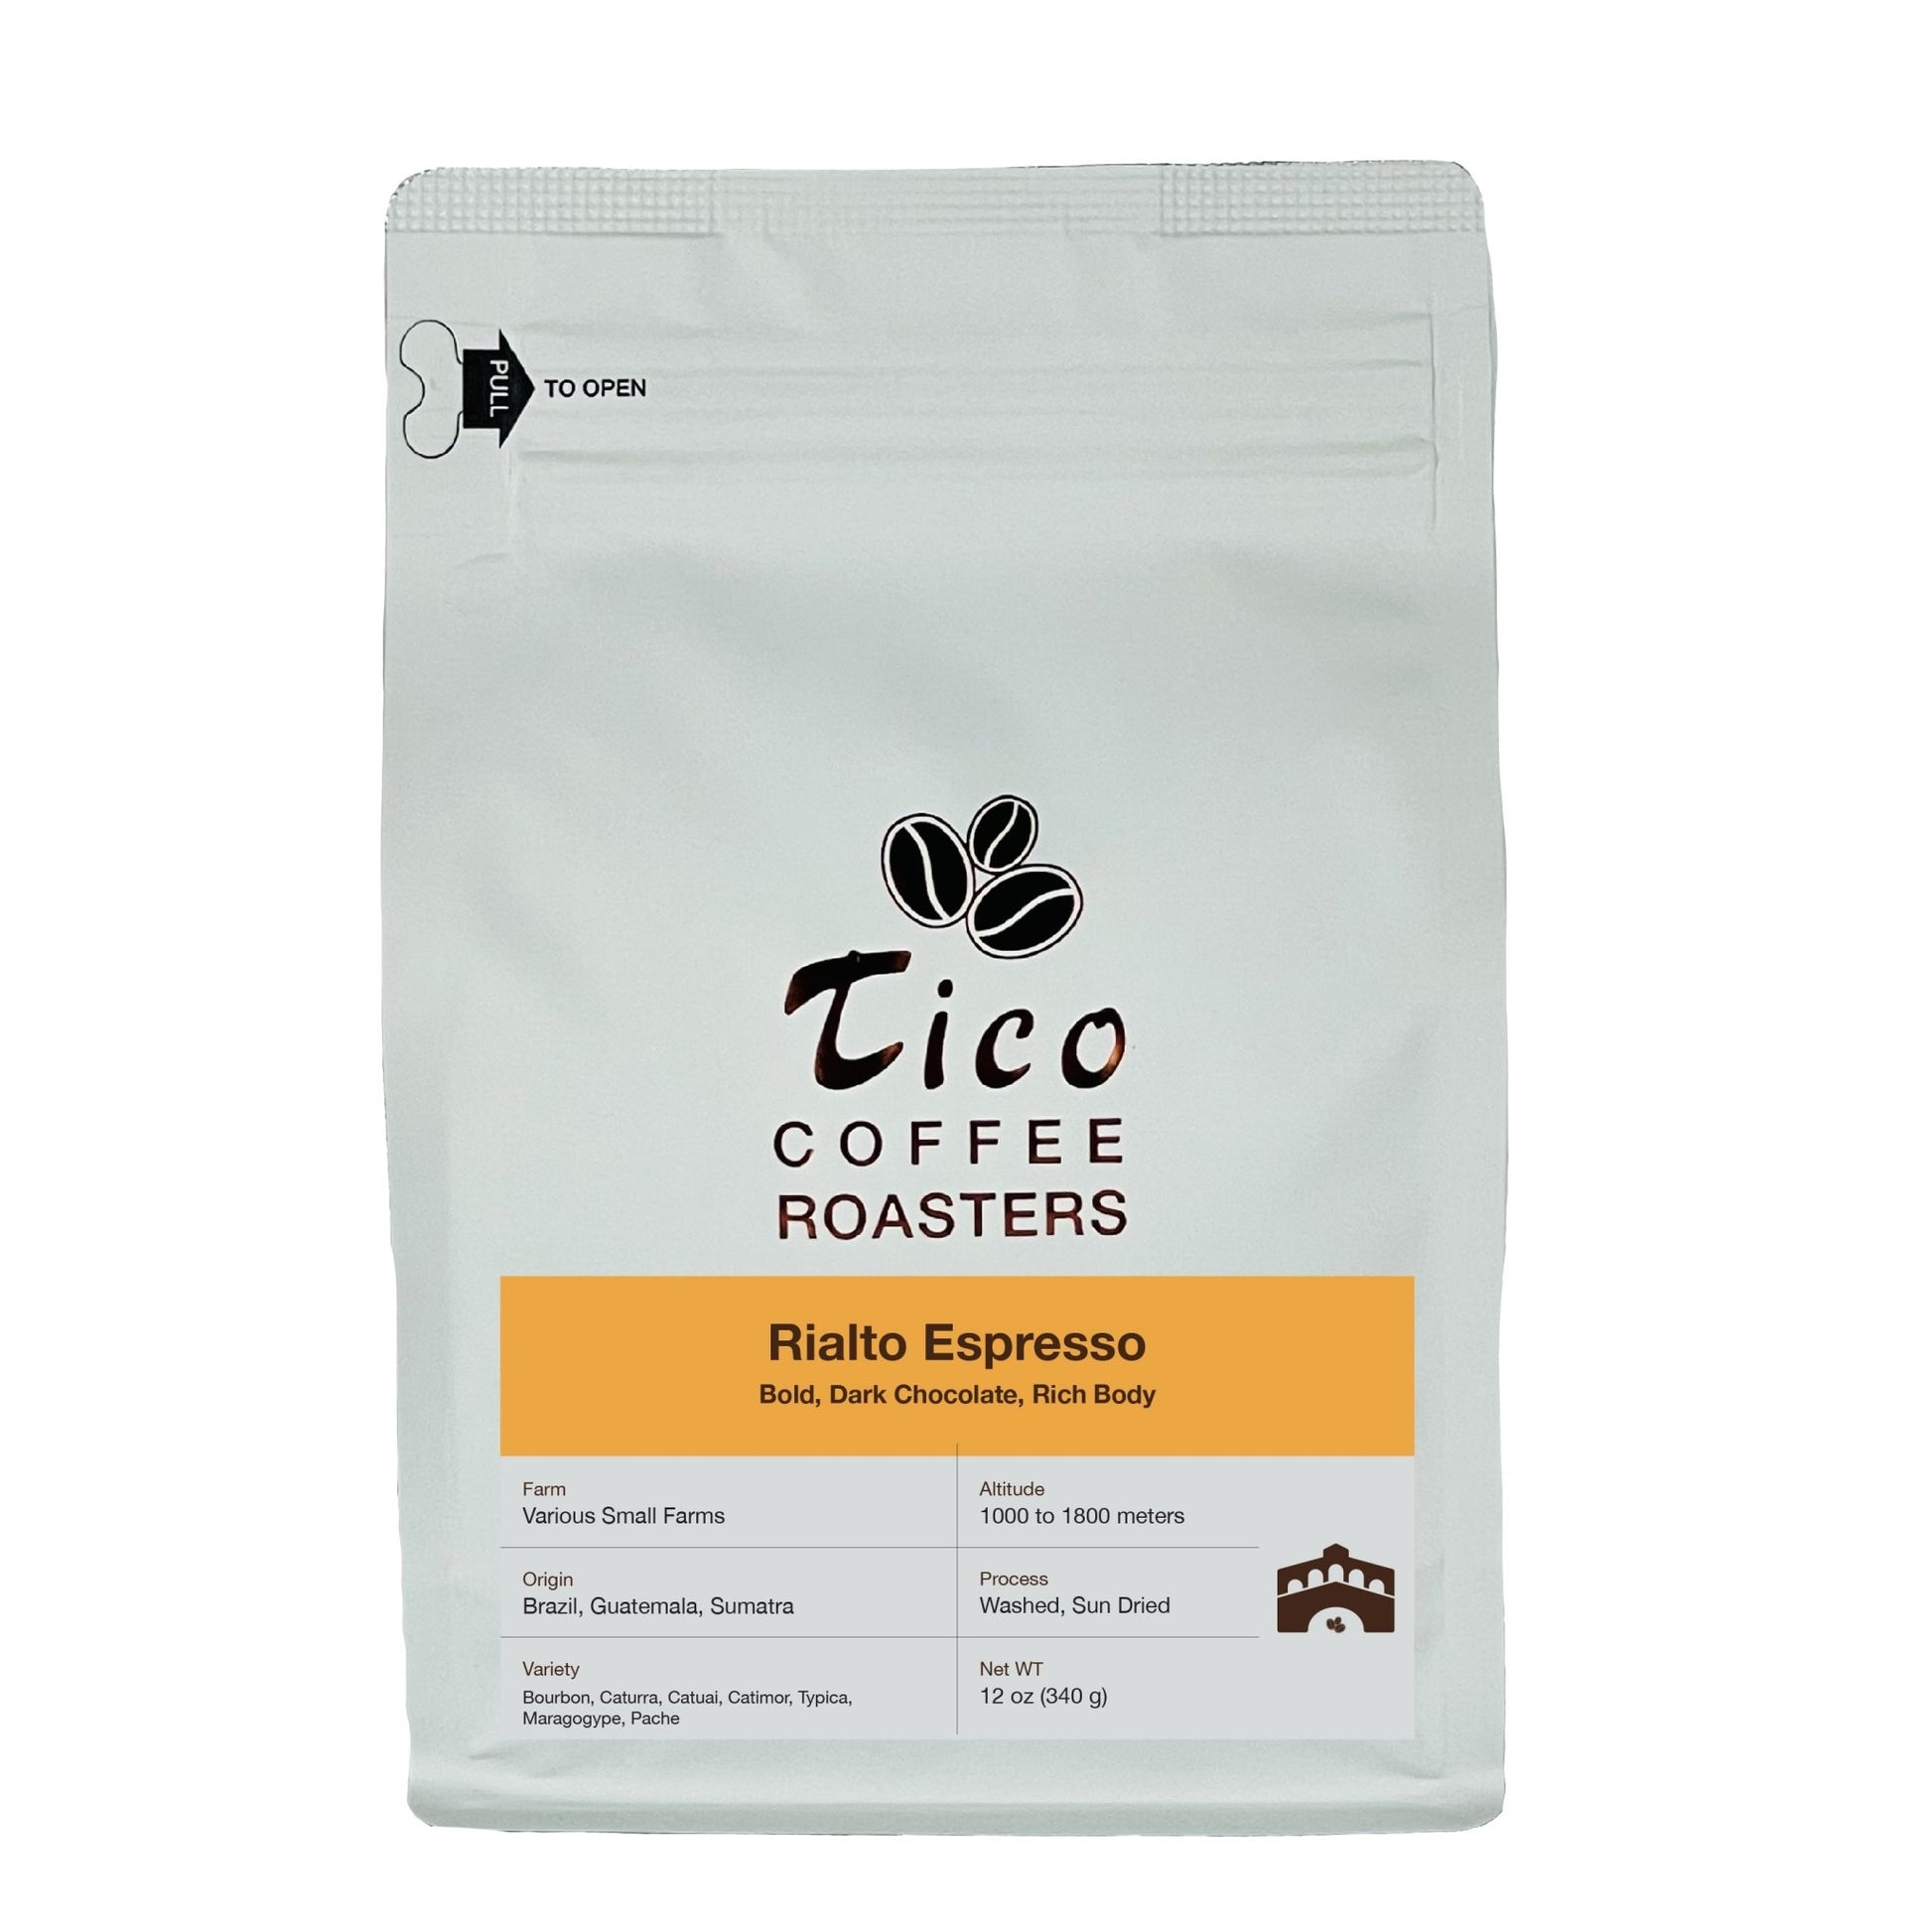 Rialto Espresso - Tico Coffee Roasters